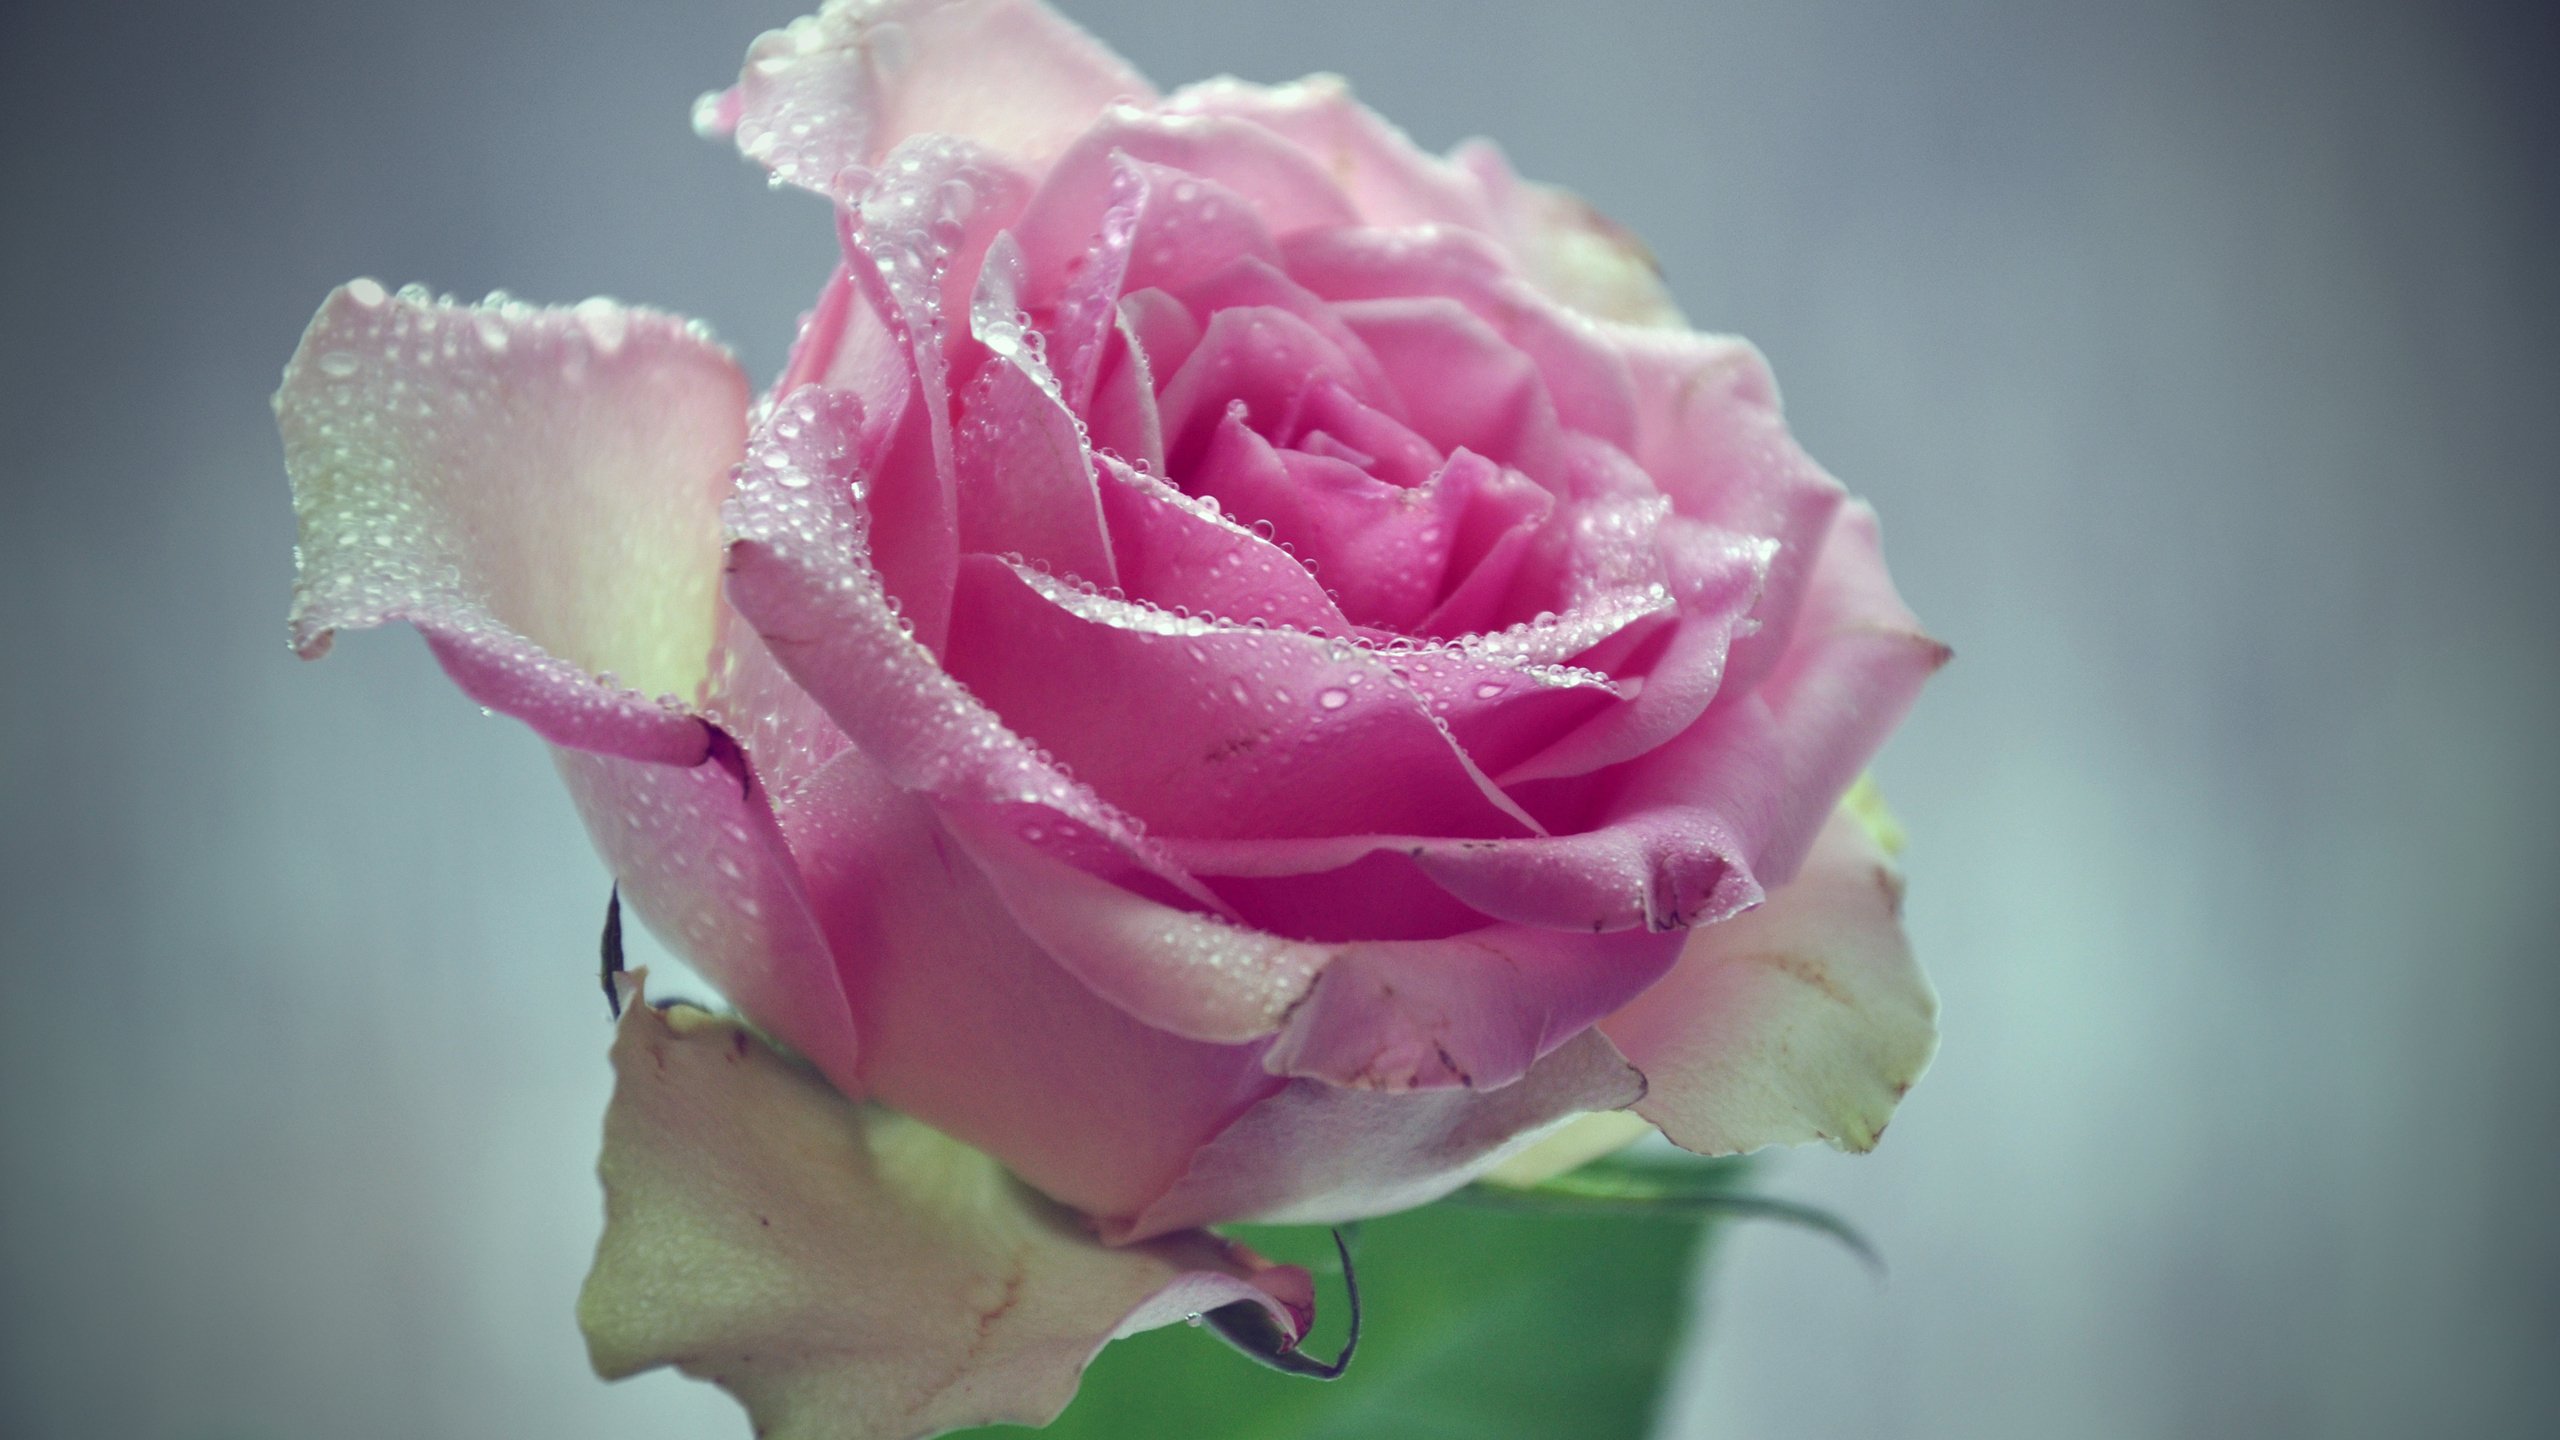 https://s1.1zoom.ru/big3/573/Roses_Pink_color_Drops_472921.jpg